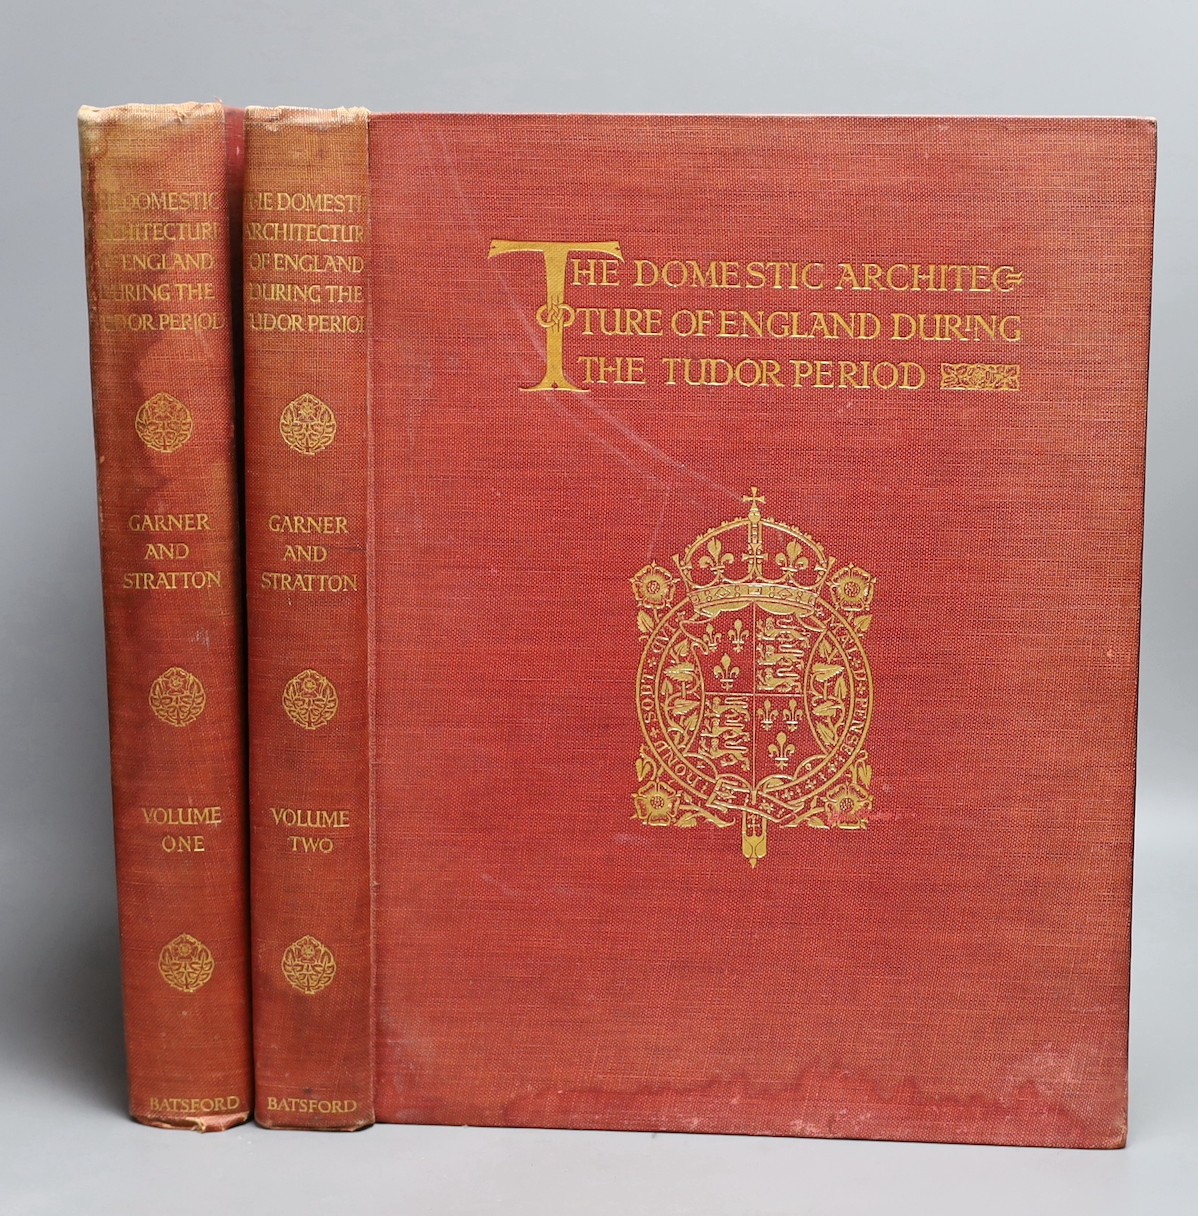 Garner, Thomas and Stratton, Arthur - The Domestic Architecture of England During the Tudor Period, 2nd edition, 2 vols, folio, red cloth gilt, B.T. Batsford Ltd., London, 1929